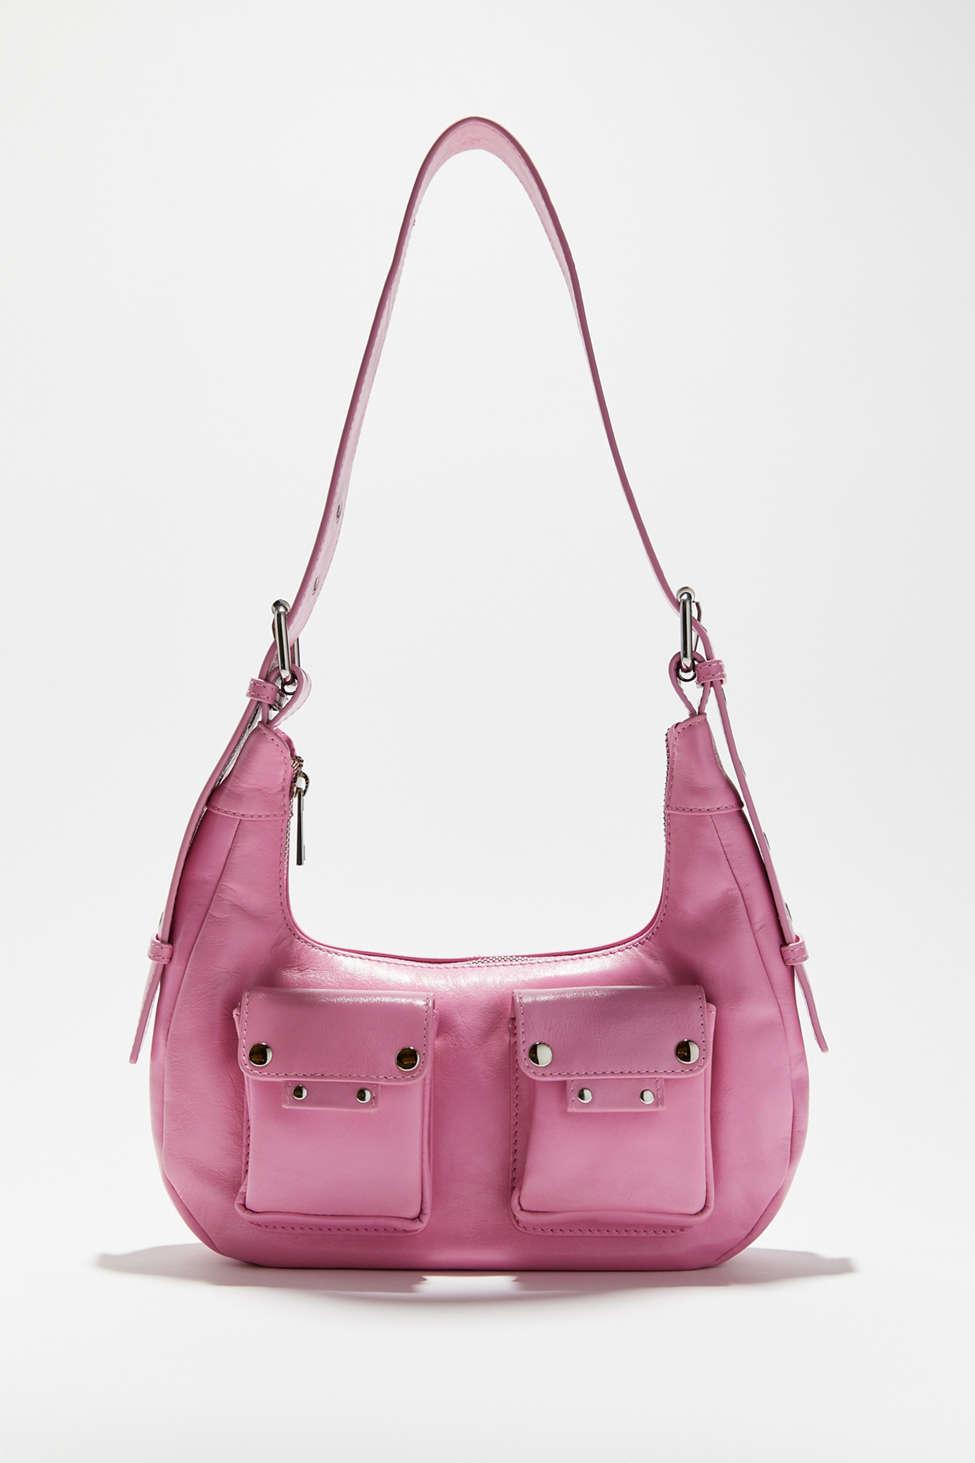 Nunoo Sally Small City Shoulder Bag in Pink | Lyst